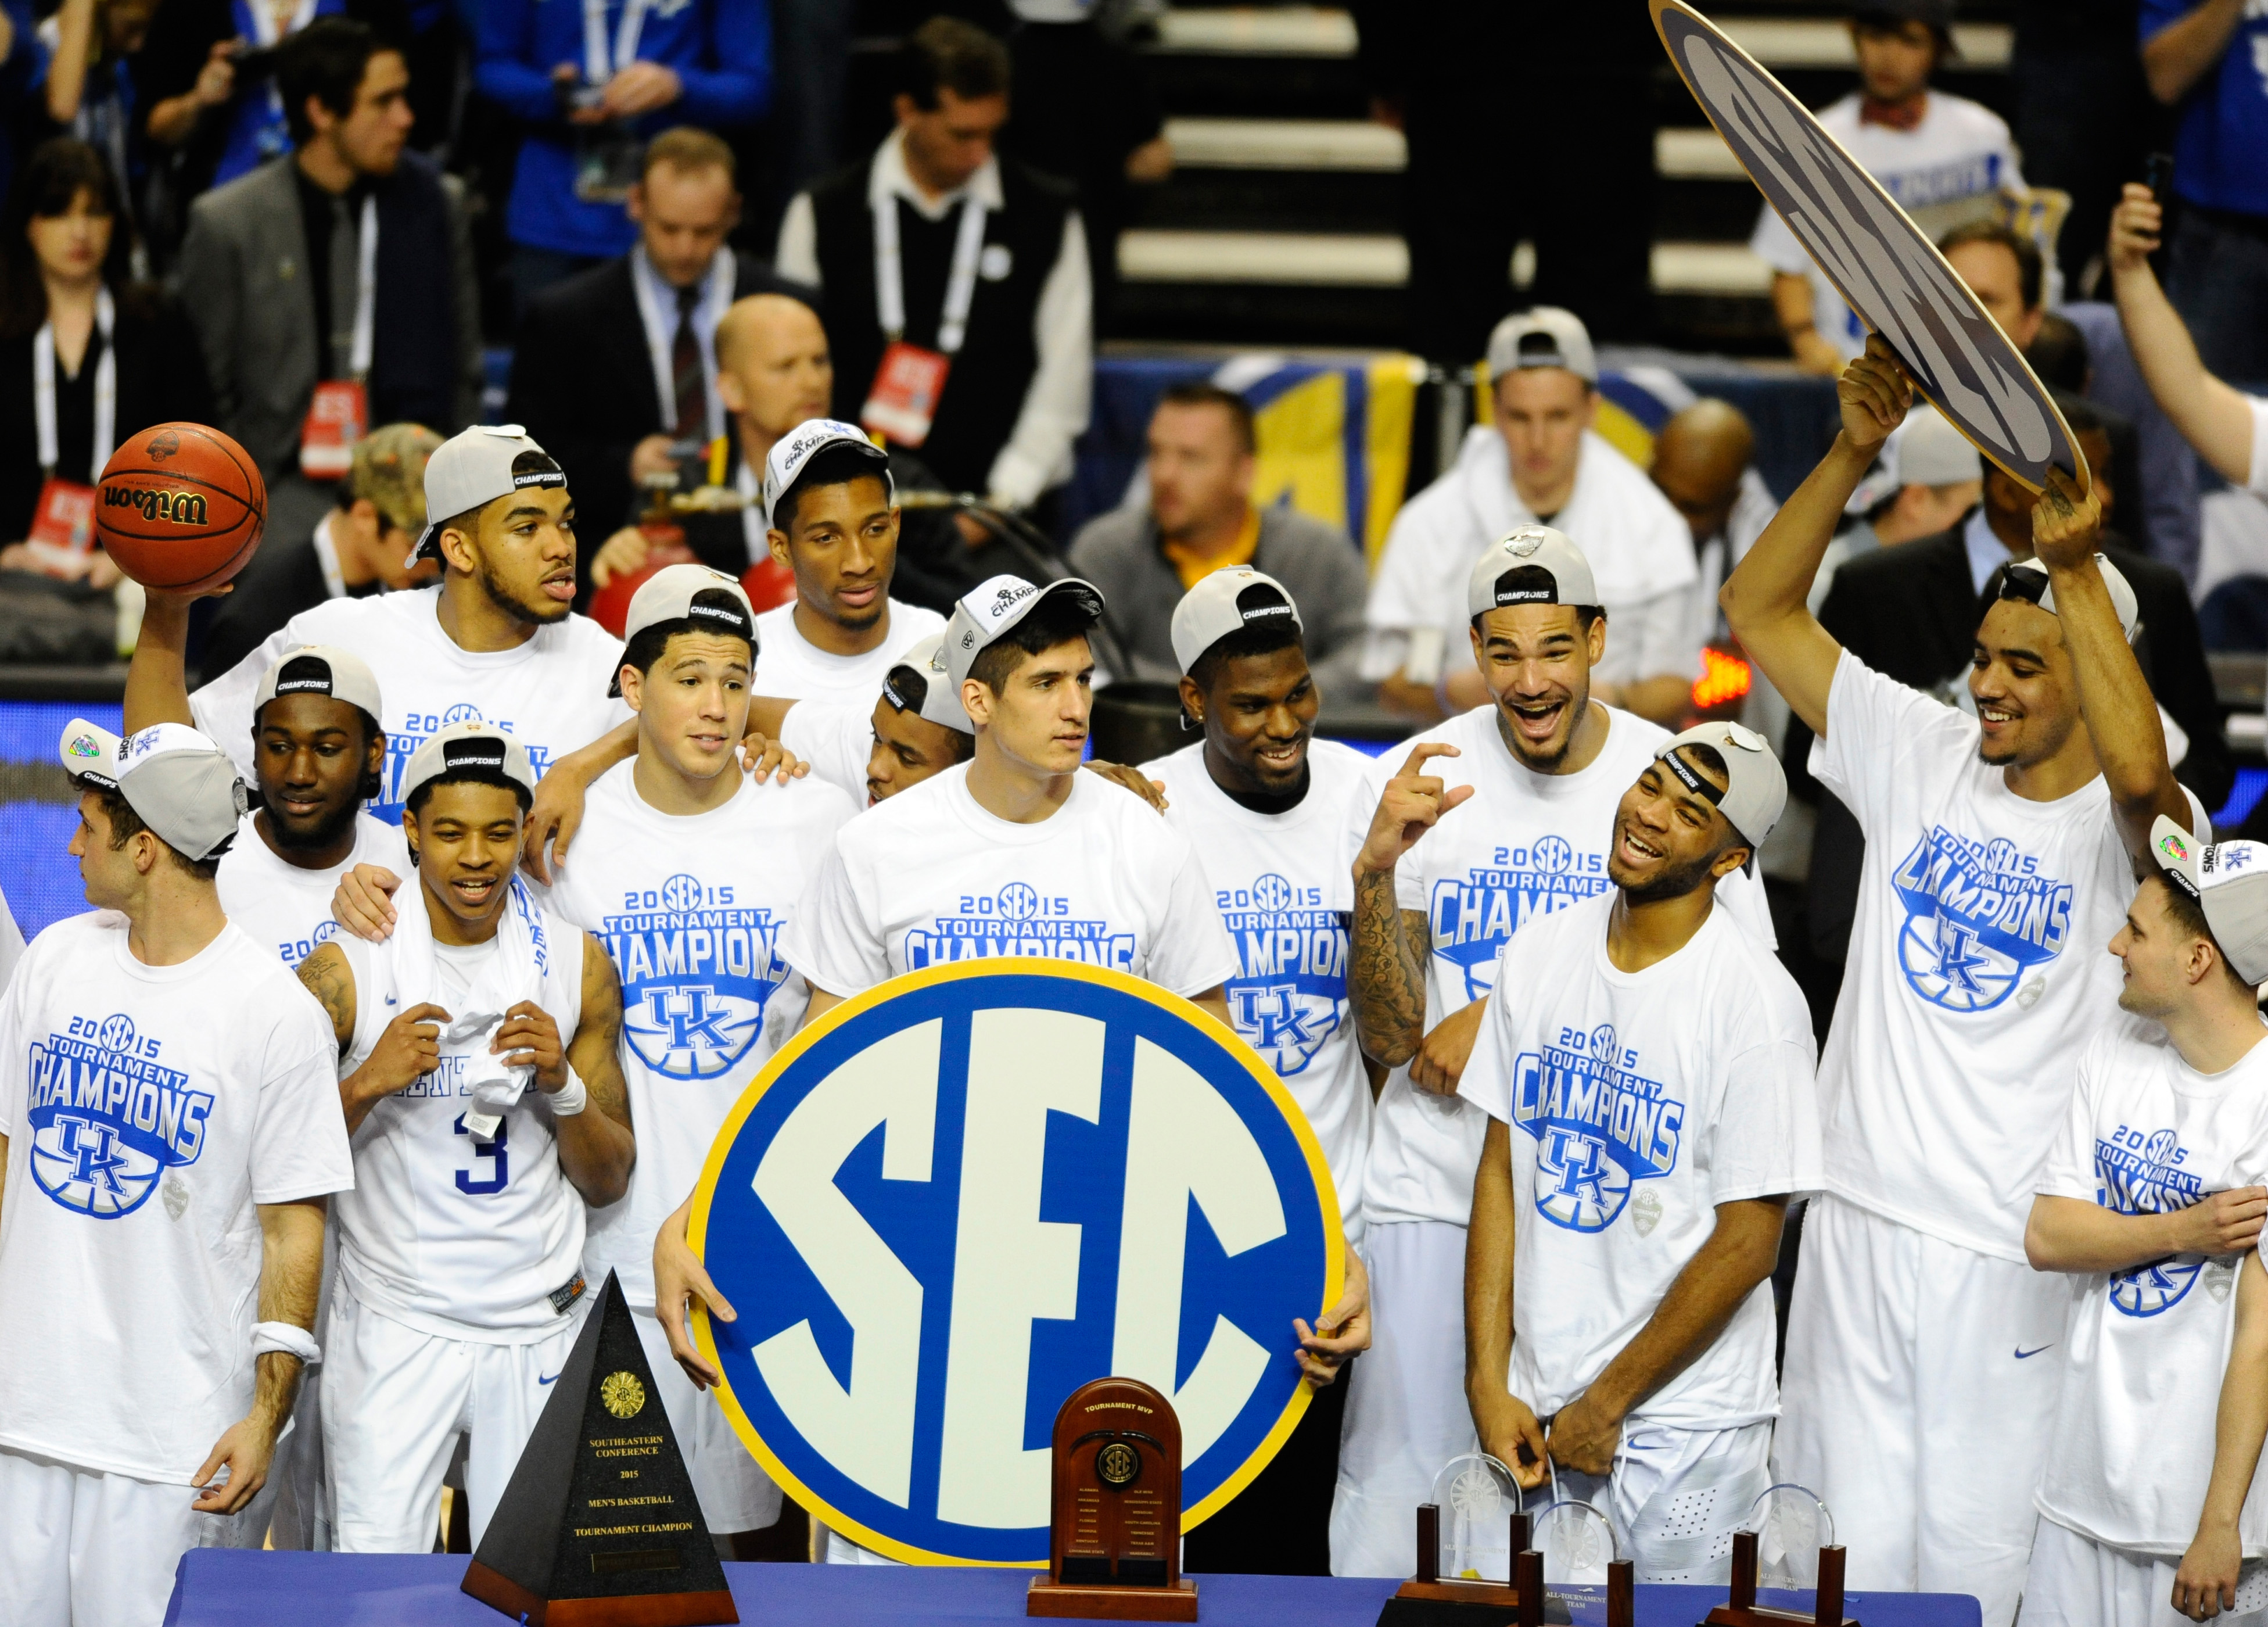 Kentucky wins SEC title, Sports